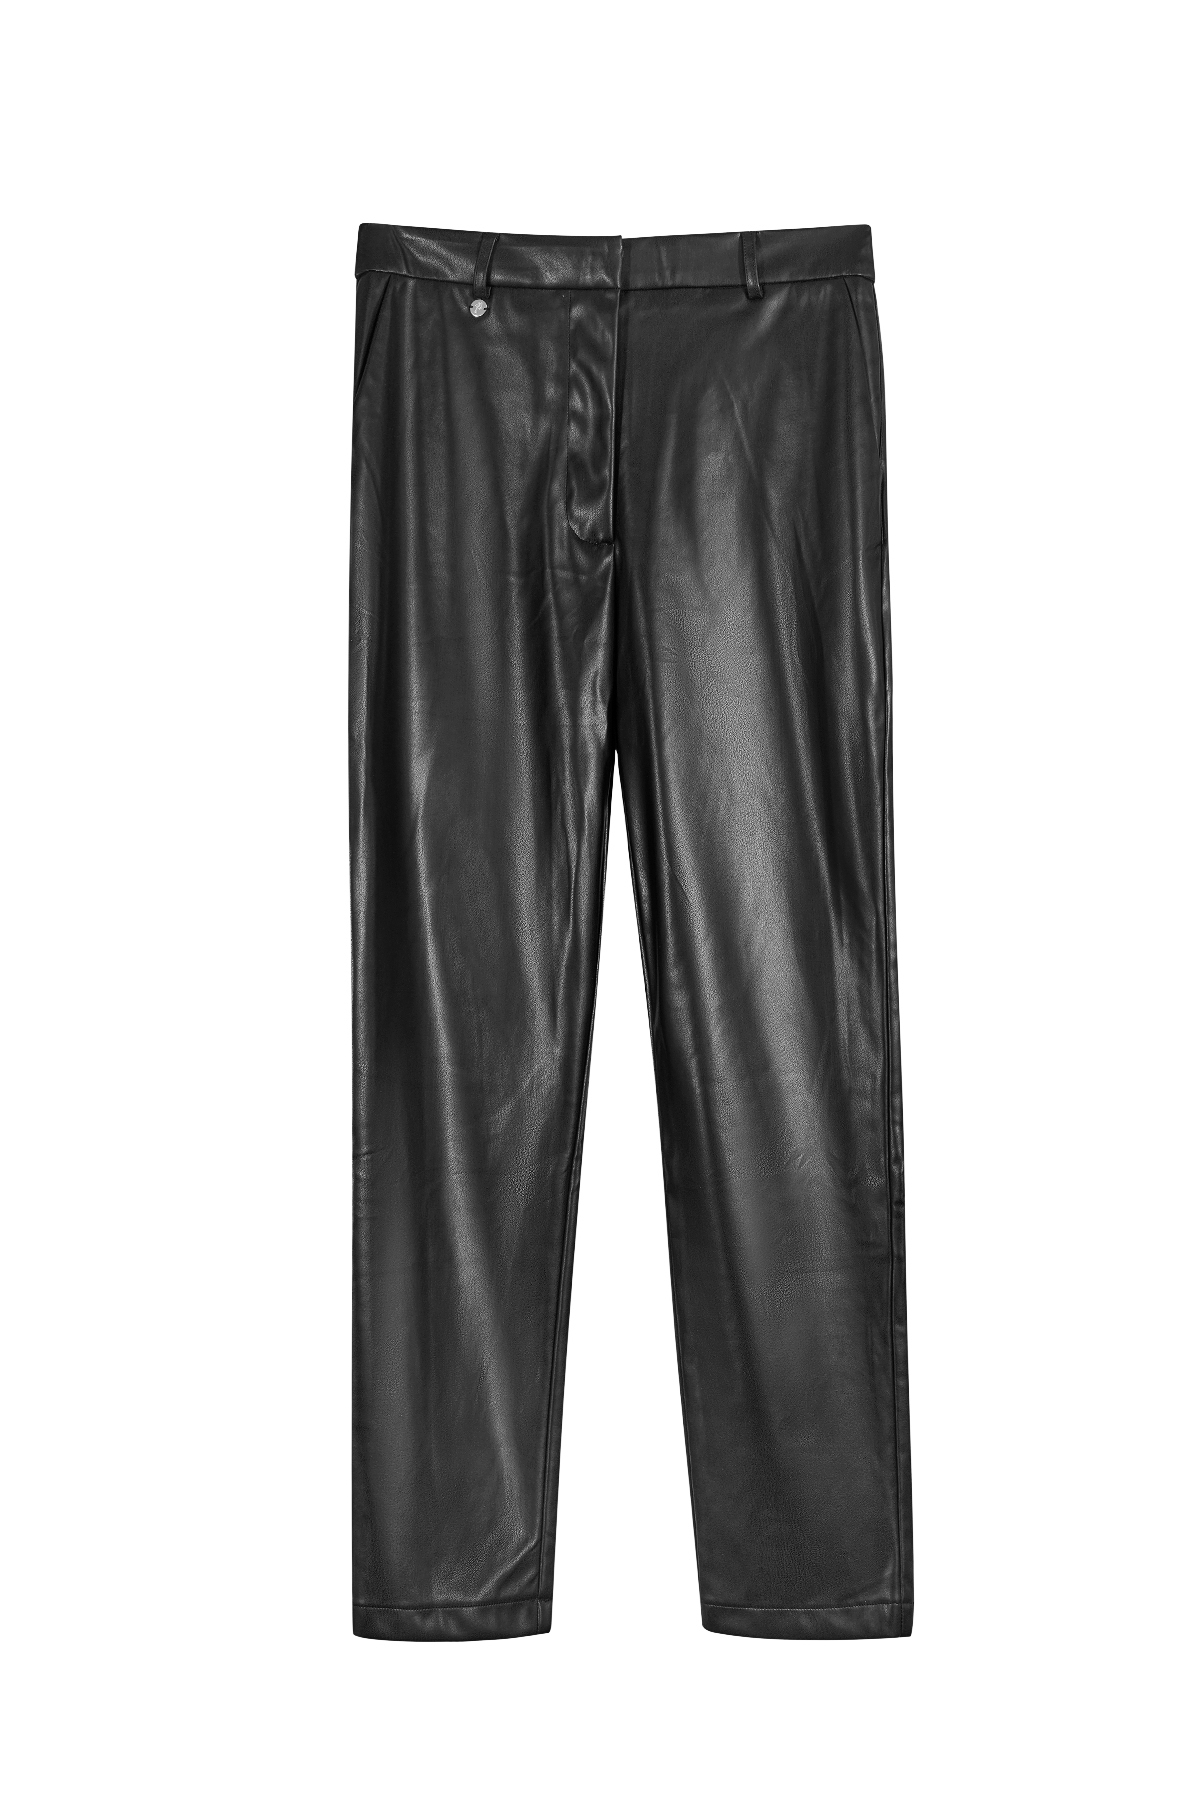 PU leather pants - black h5 